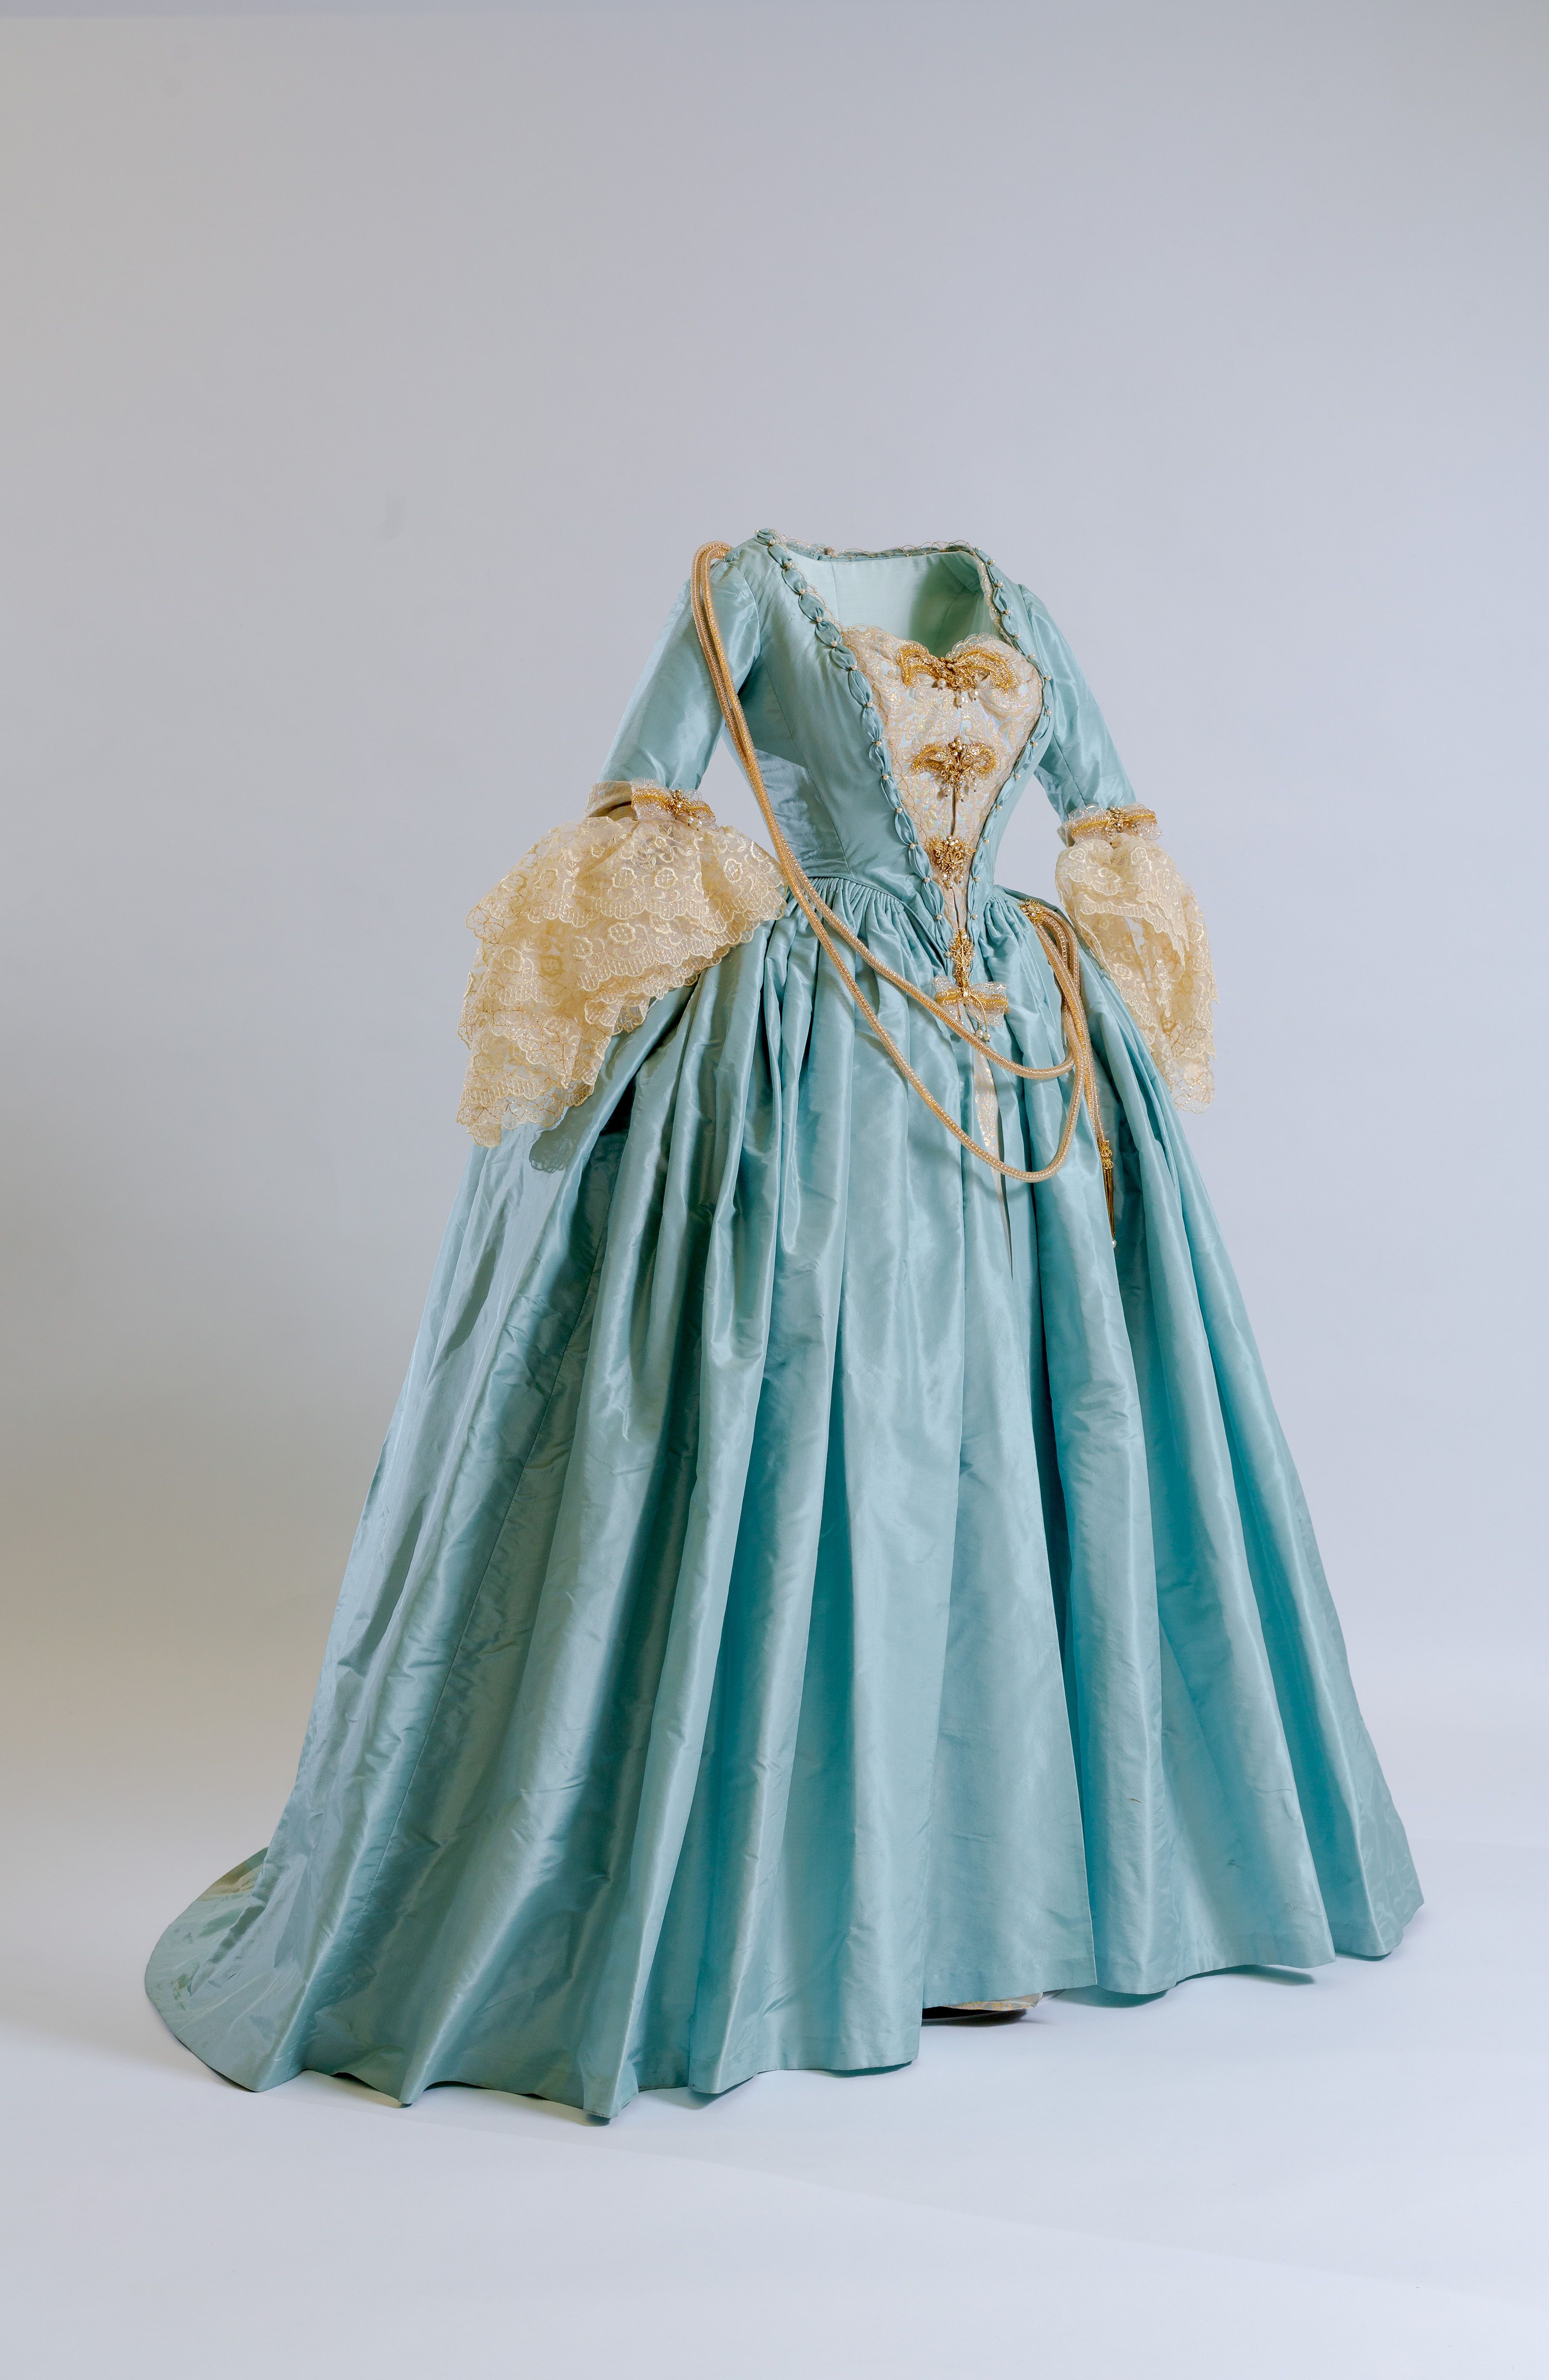 18th century royal dress